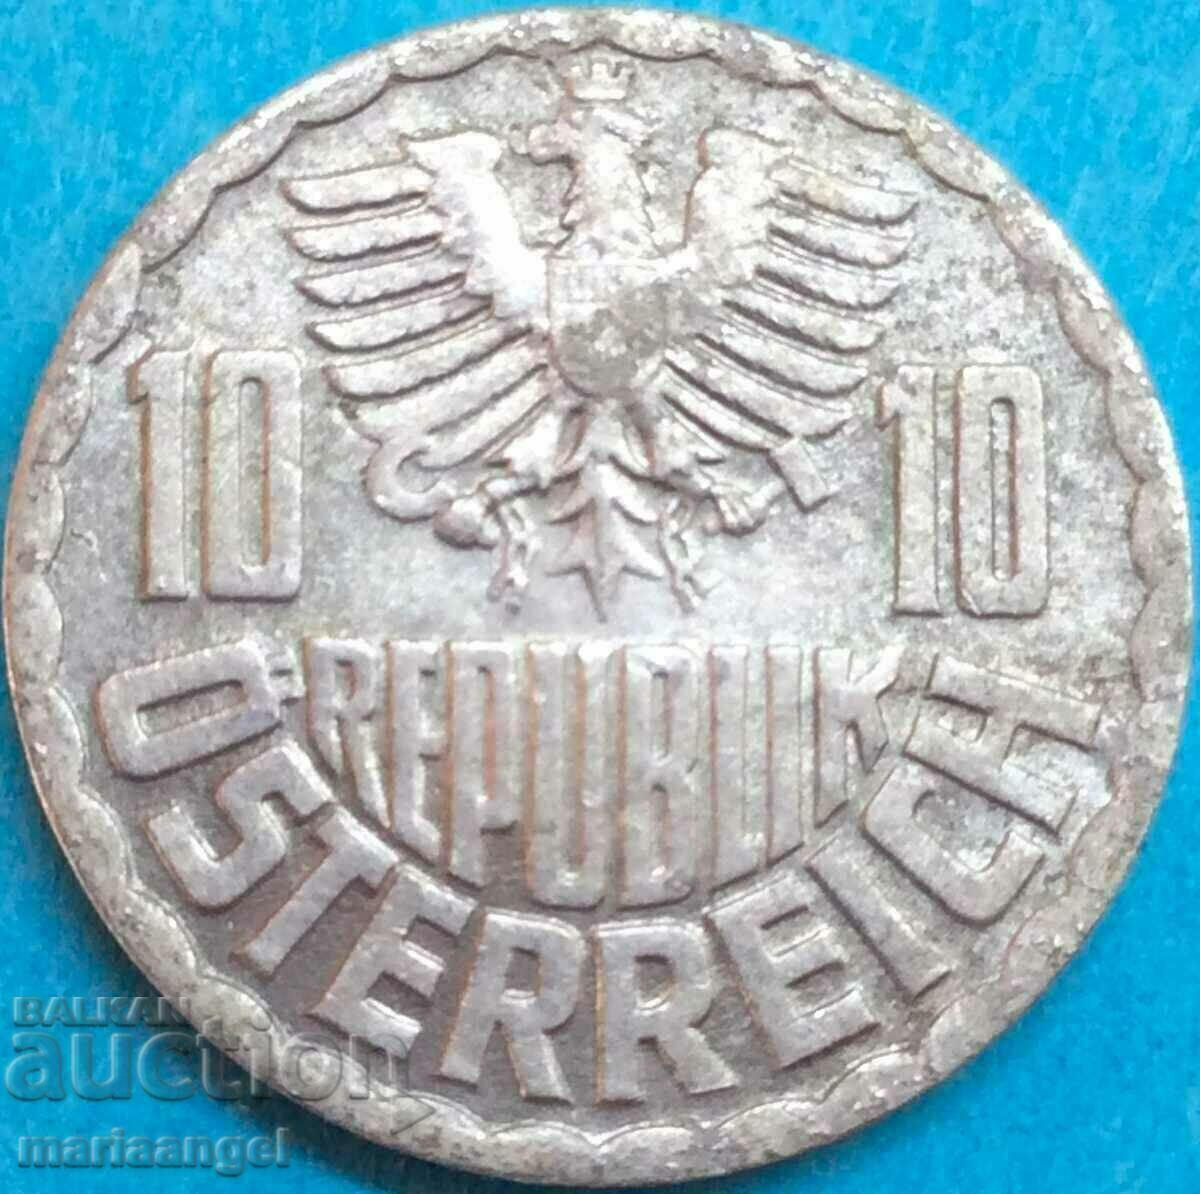 Austria 1972 10 pennies